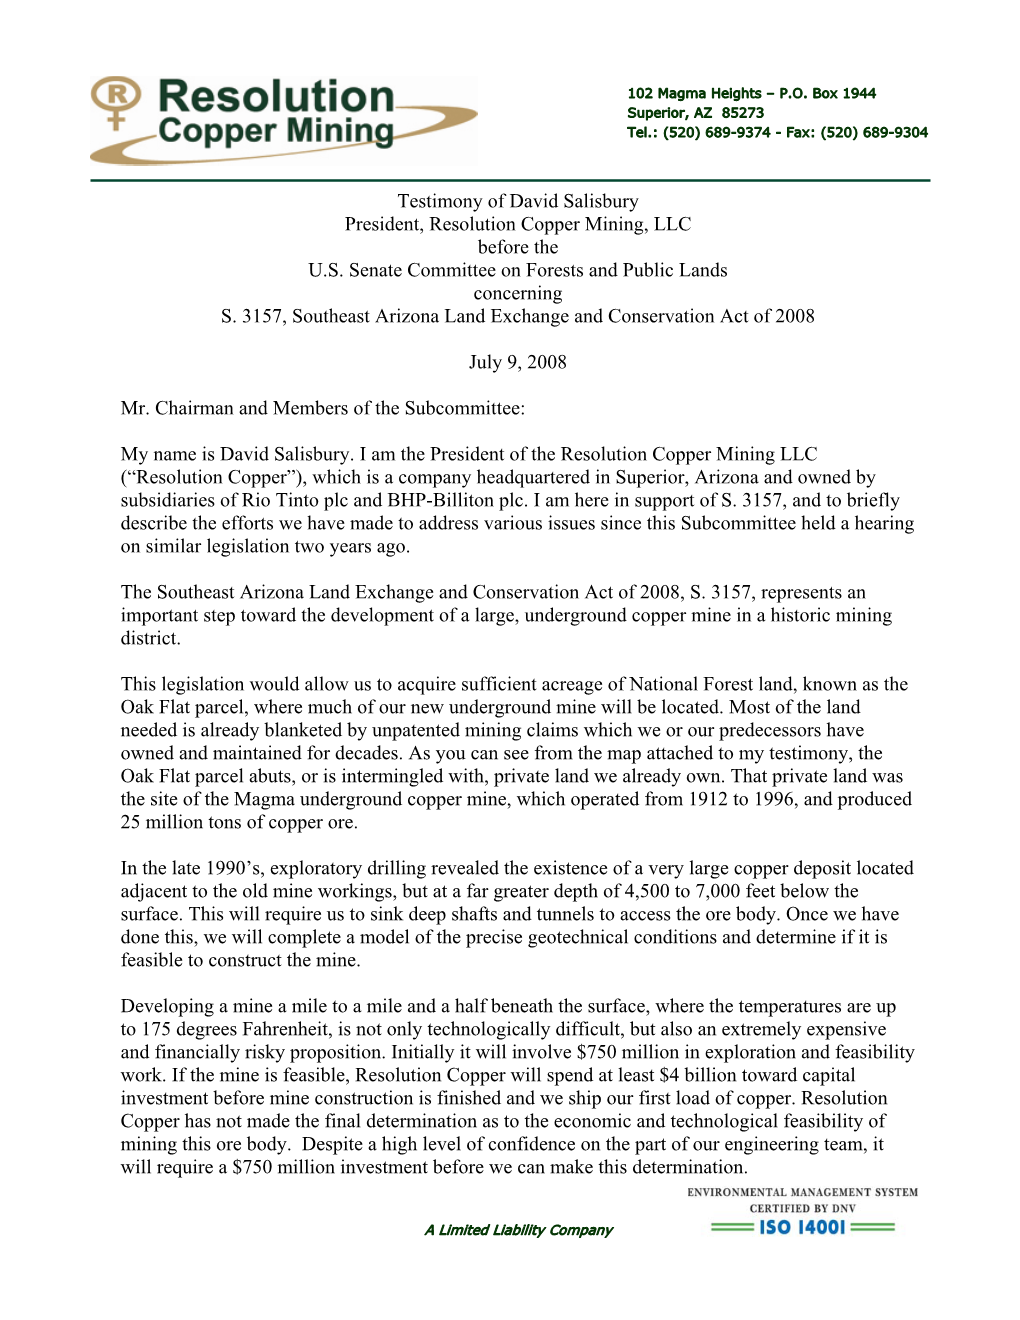 Testimony of David Salisbury President, Resolution Copper Mining, LLC Before the U.S